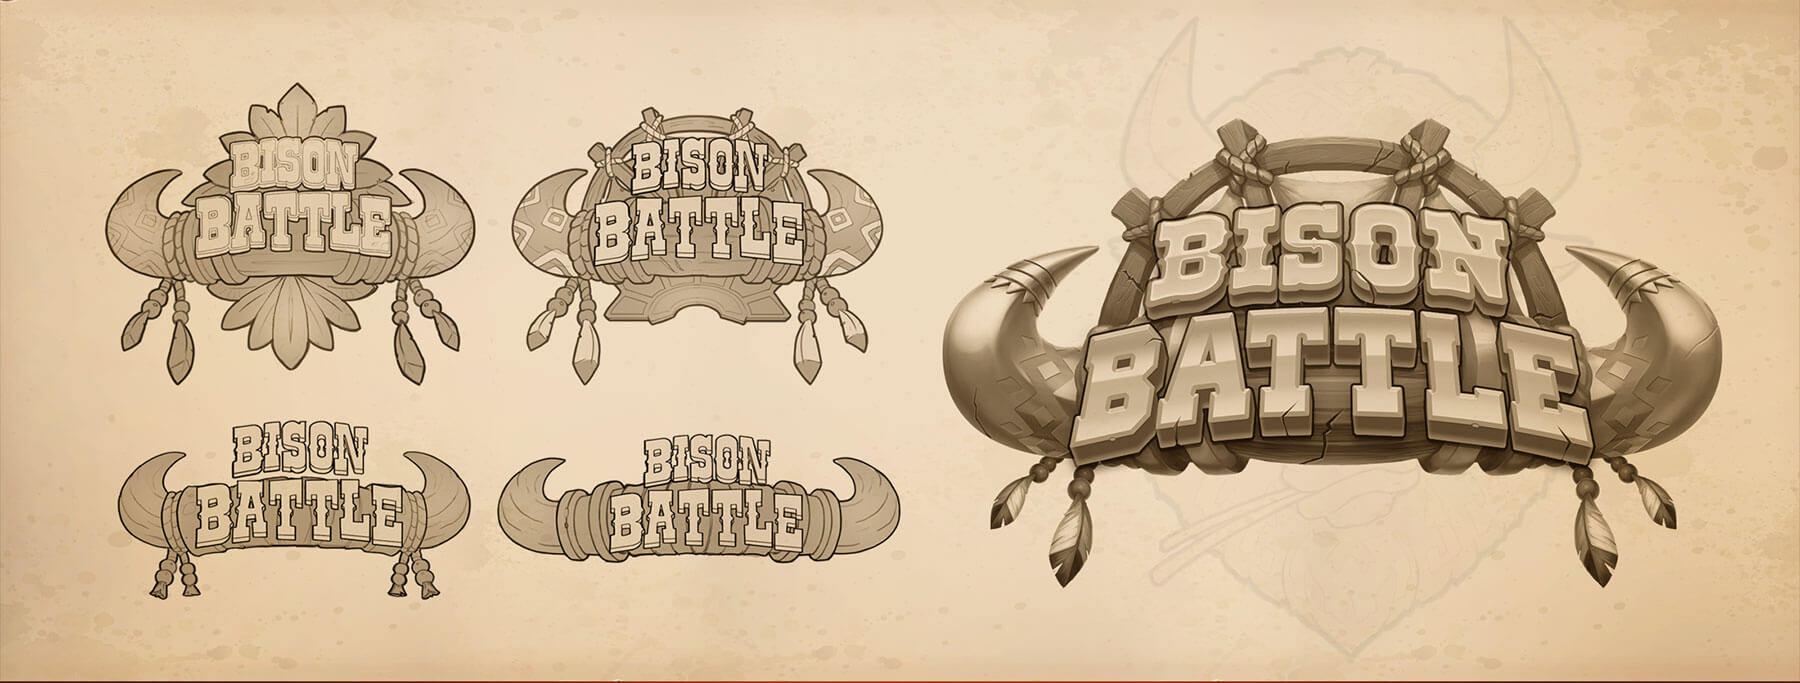 Bison Battle slot logo concept